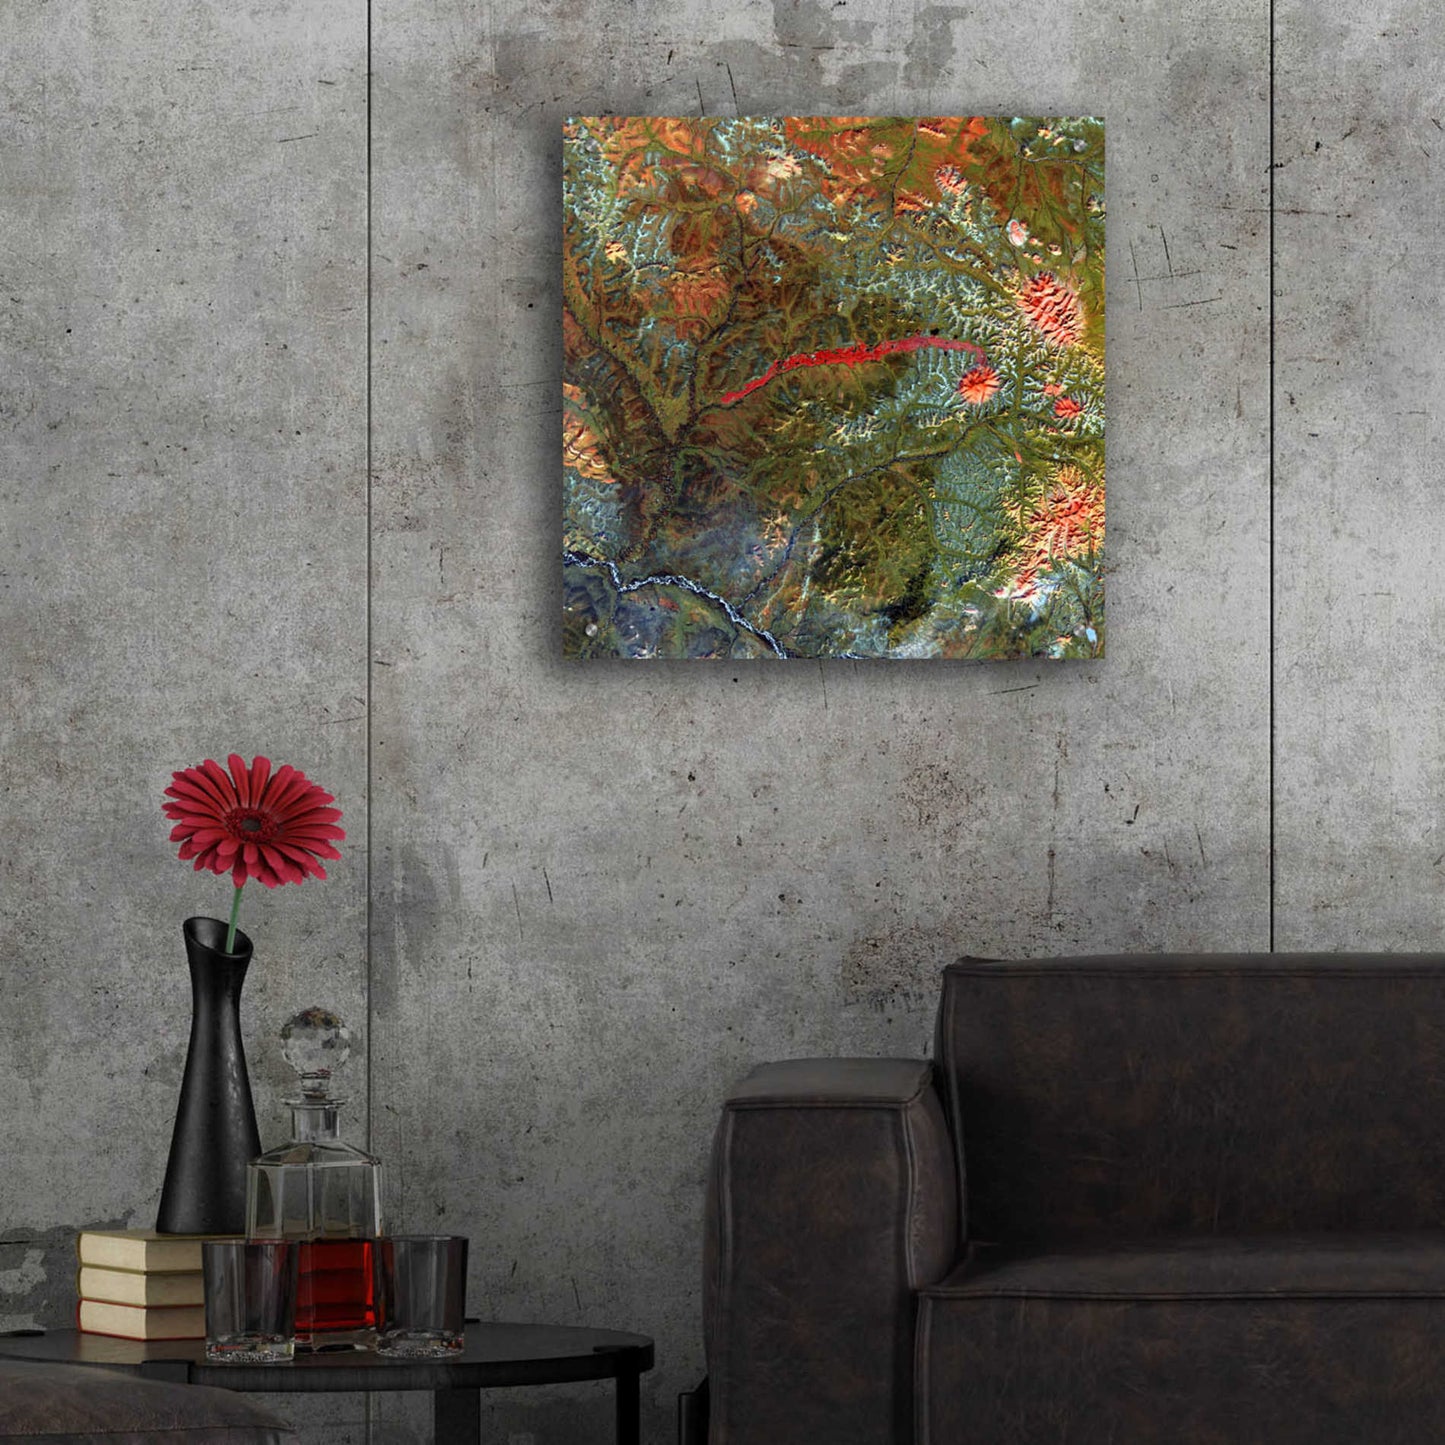 Epic Art 'Earth as Art: Anyuyskiy Volcano,' Acrylic Glass Wall Art,24x24